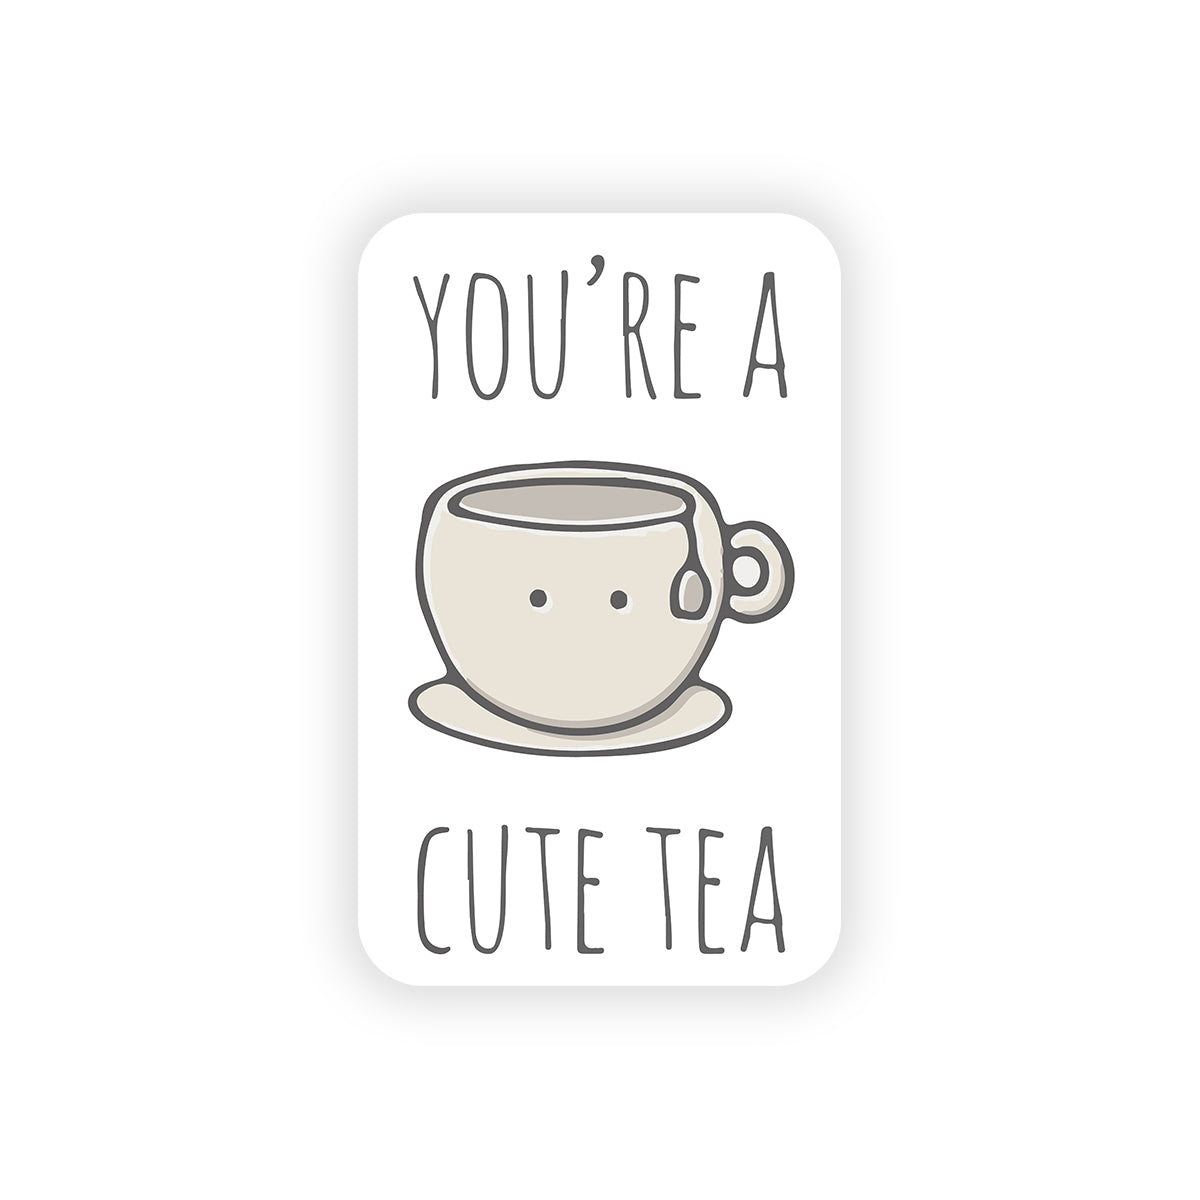 You're a cute-tea